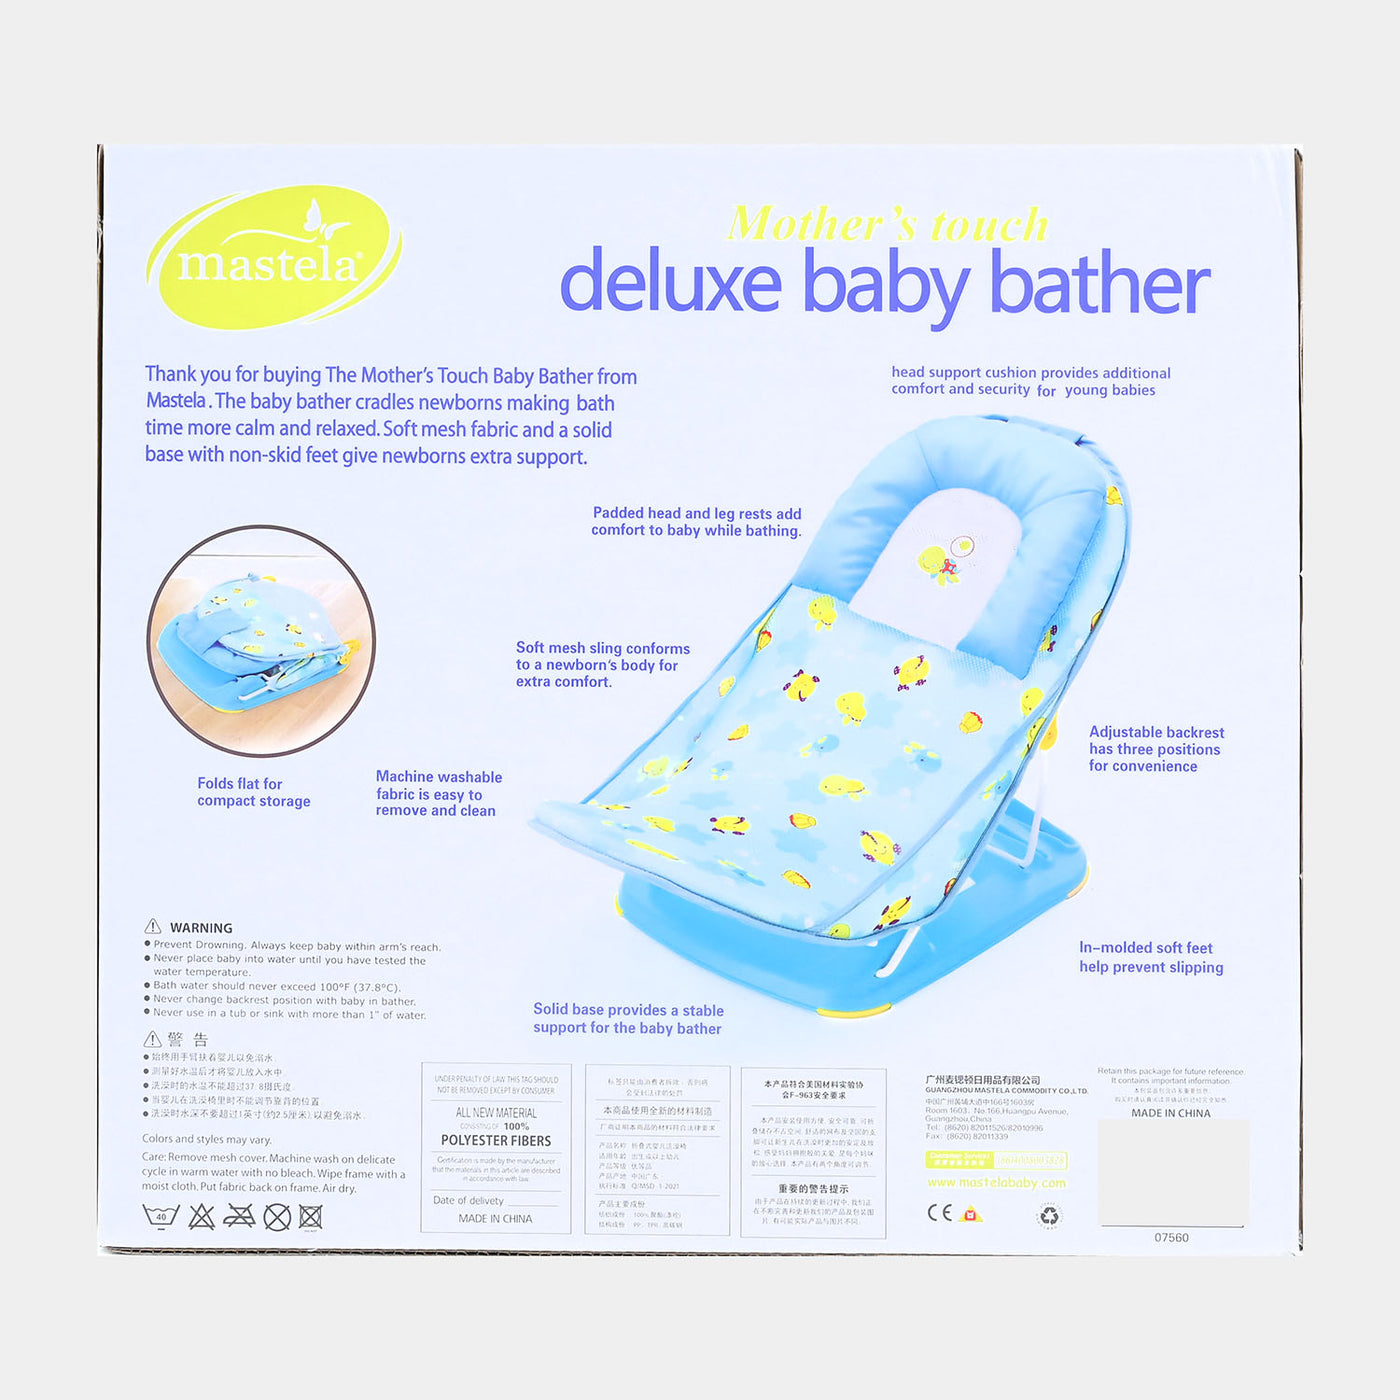 Deluxe Baby Bather - Mix